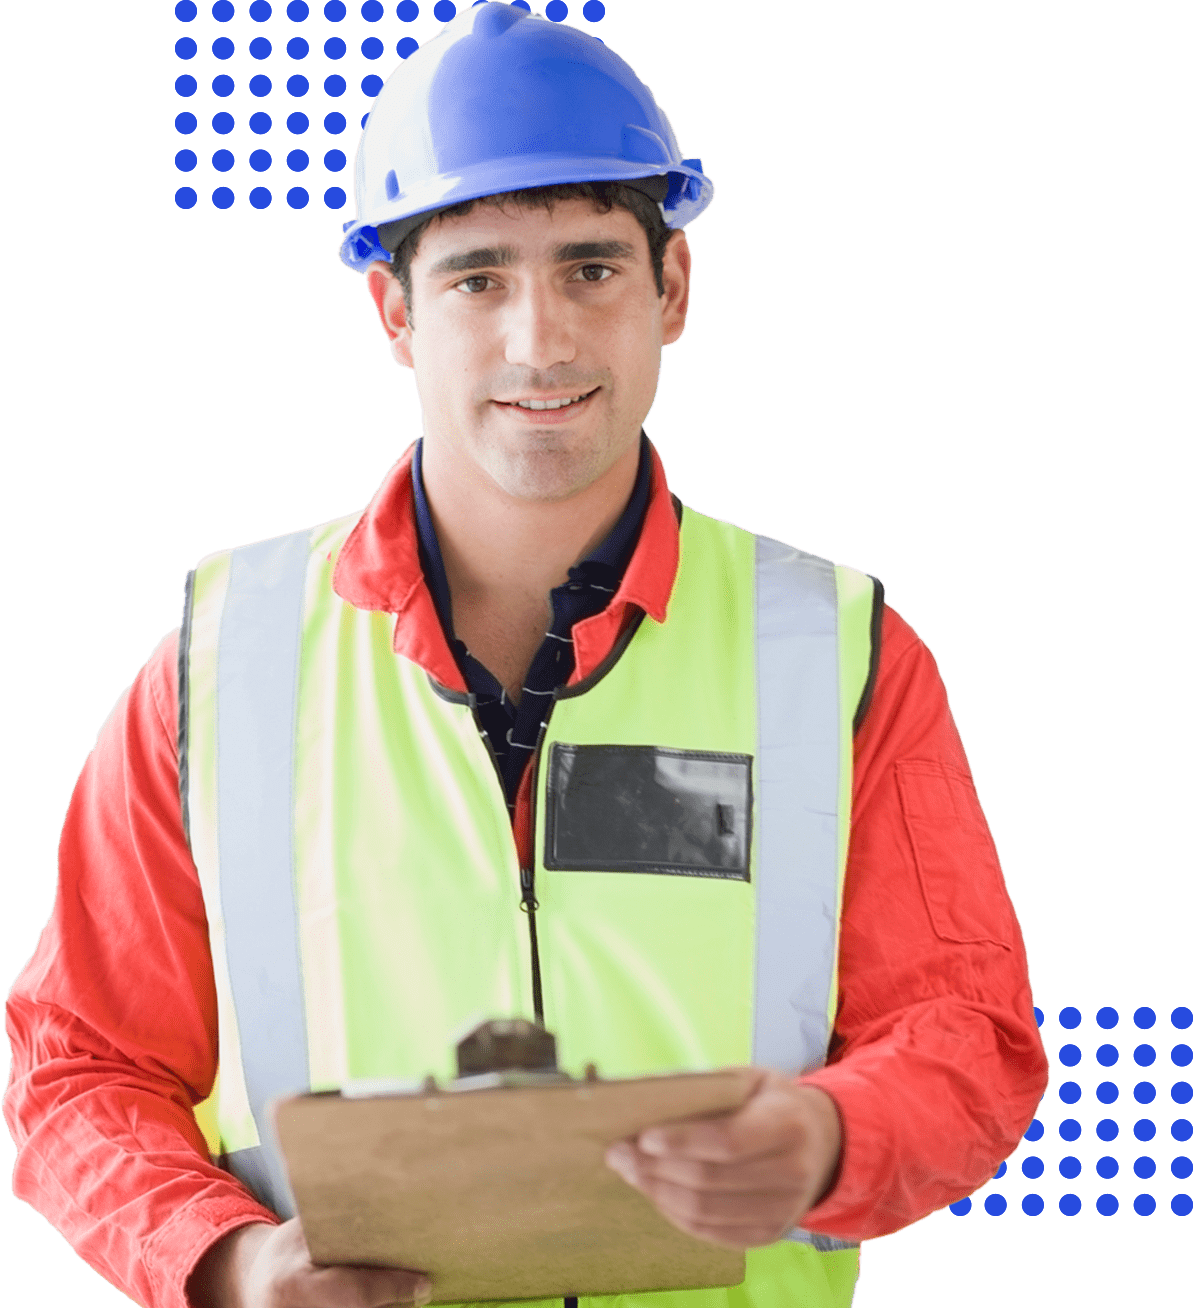 Electrical Engineer wearing blue helmet & holding folder